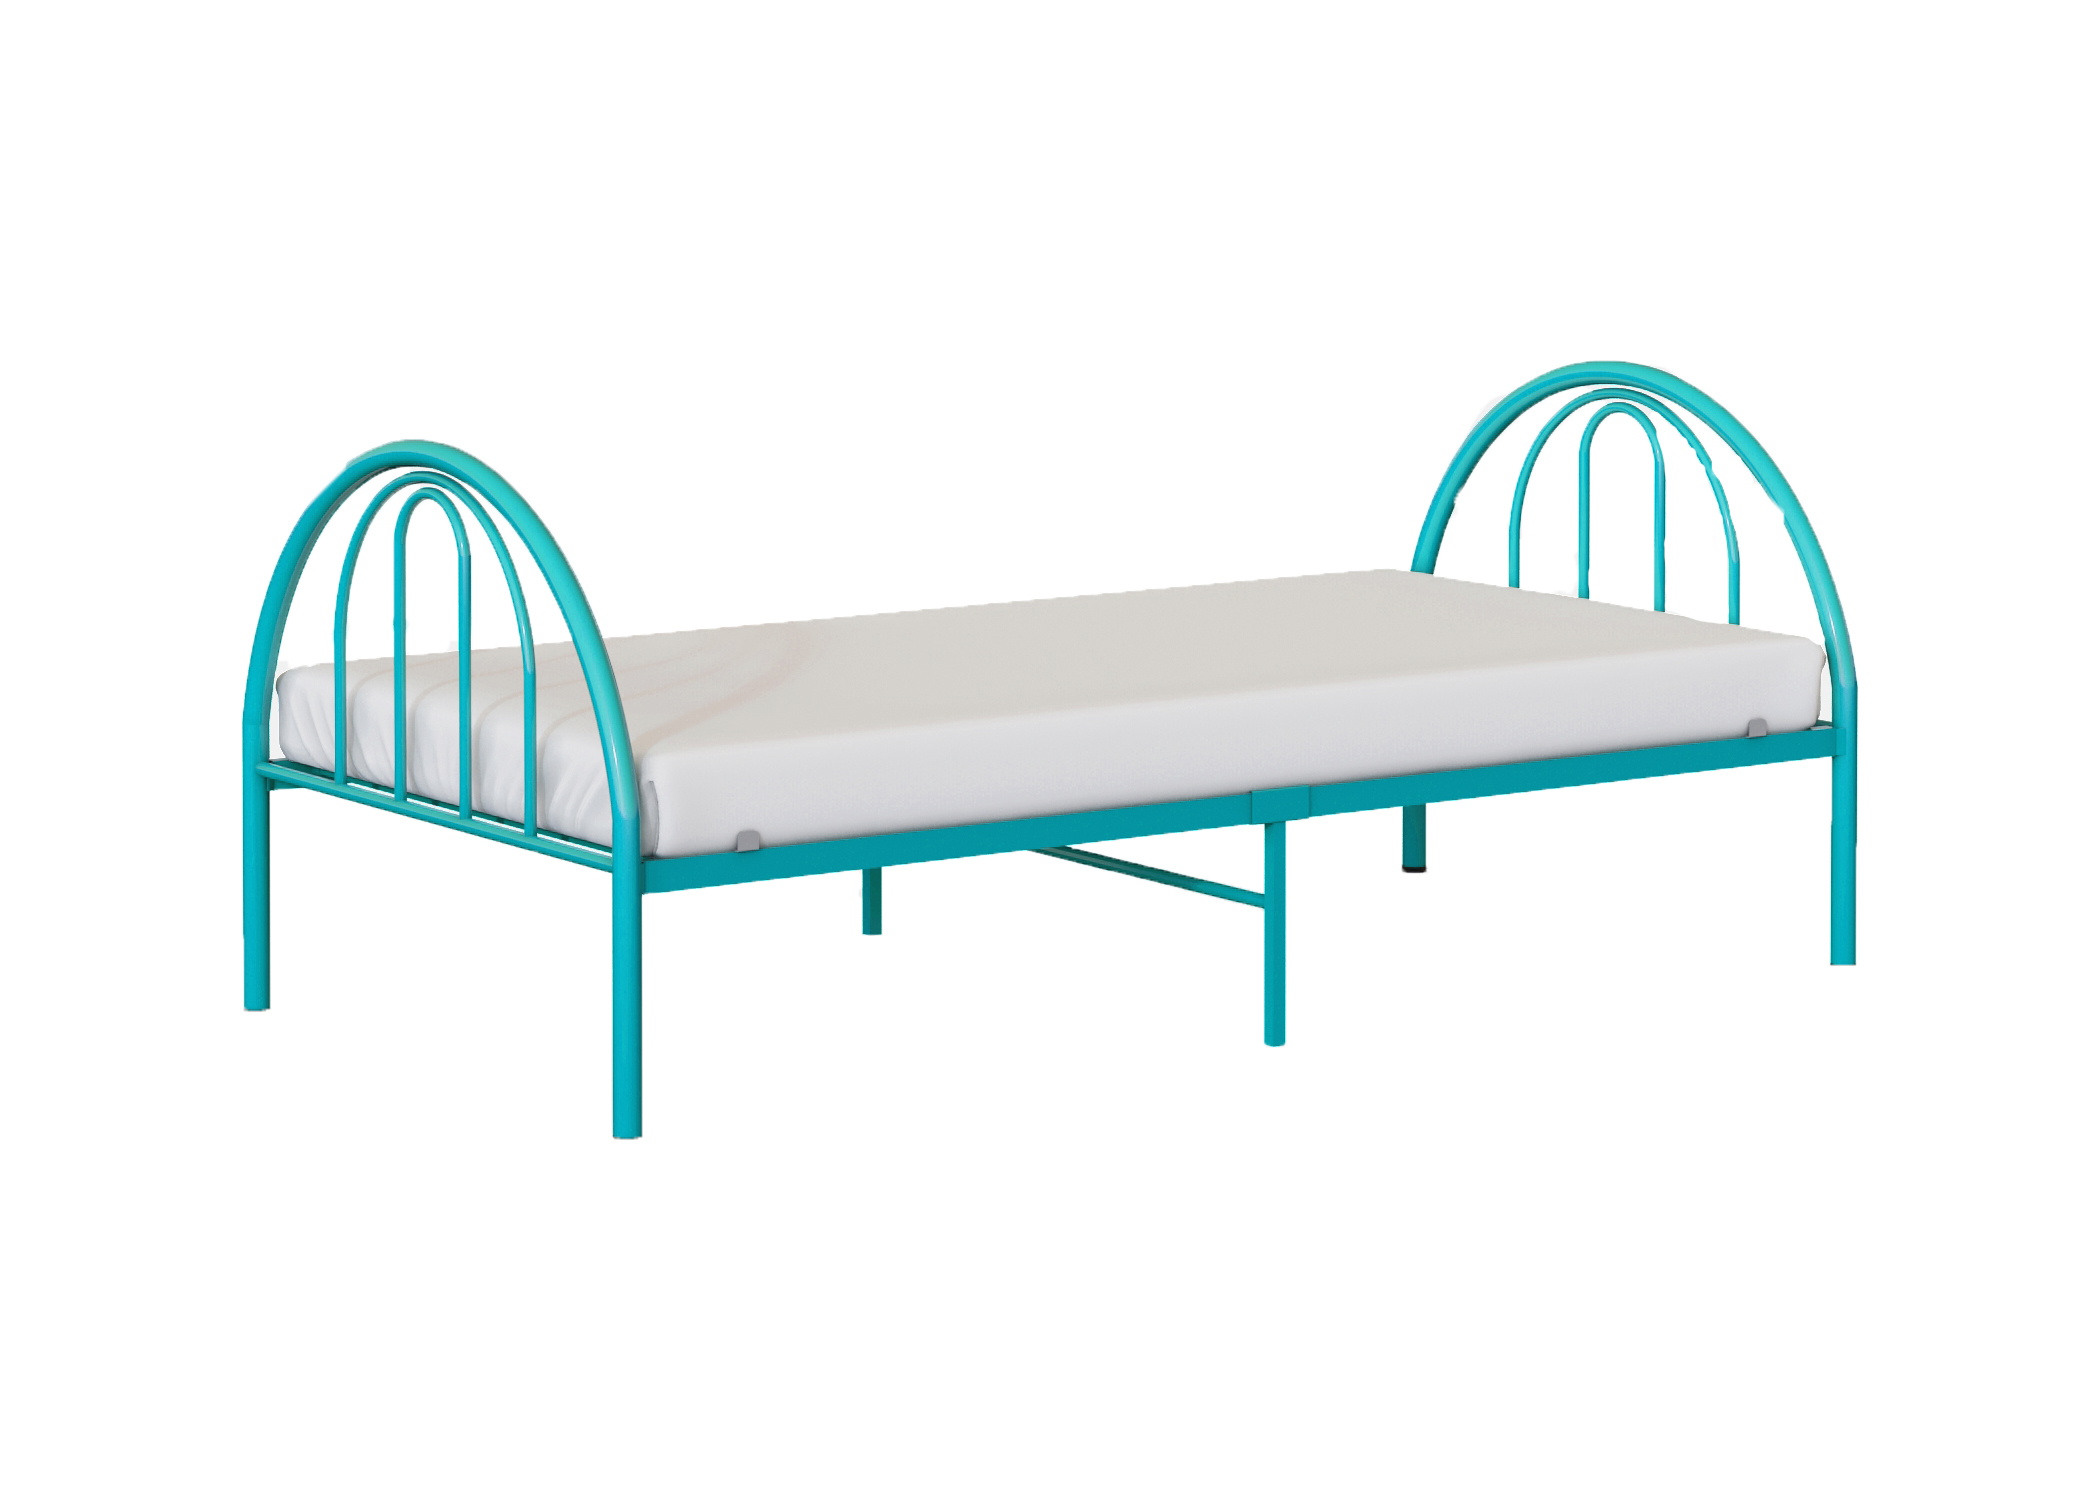 BK Furniture Brooklyn Classic Metal Bed, Twin, Turquoise - image 3 of 5